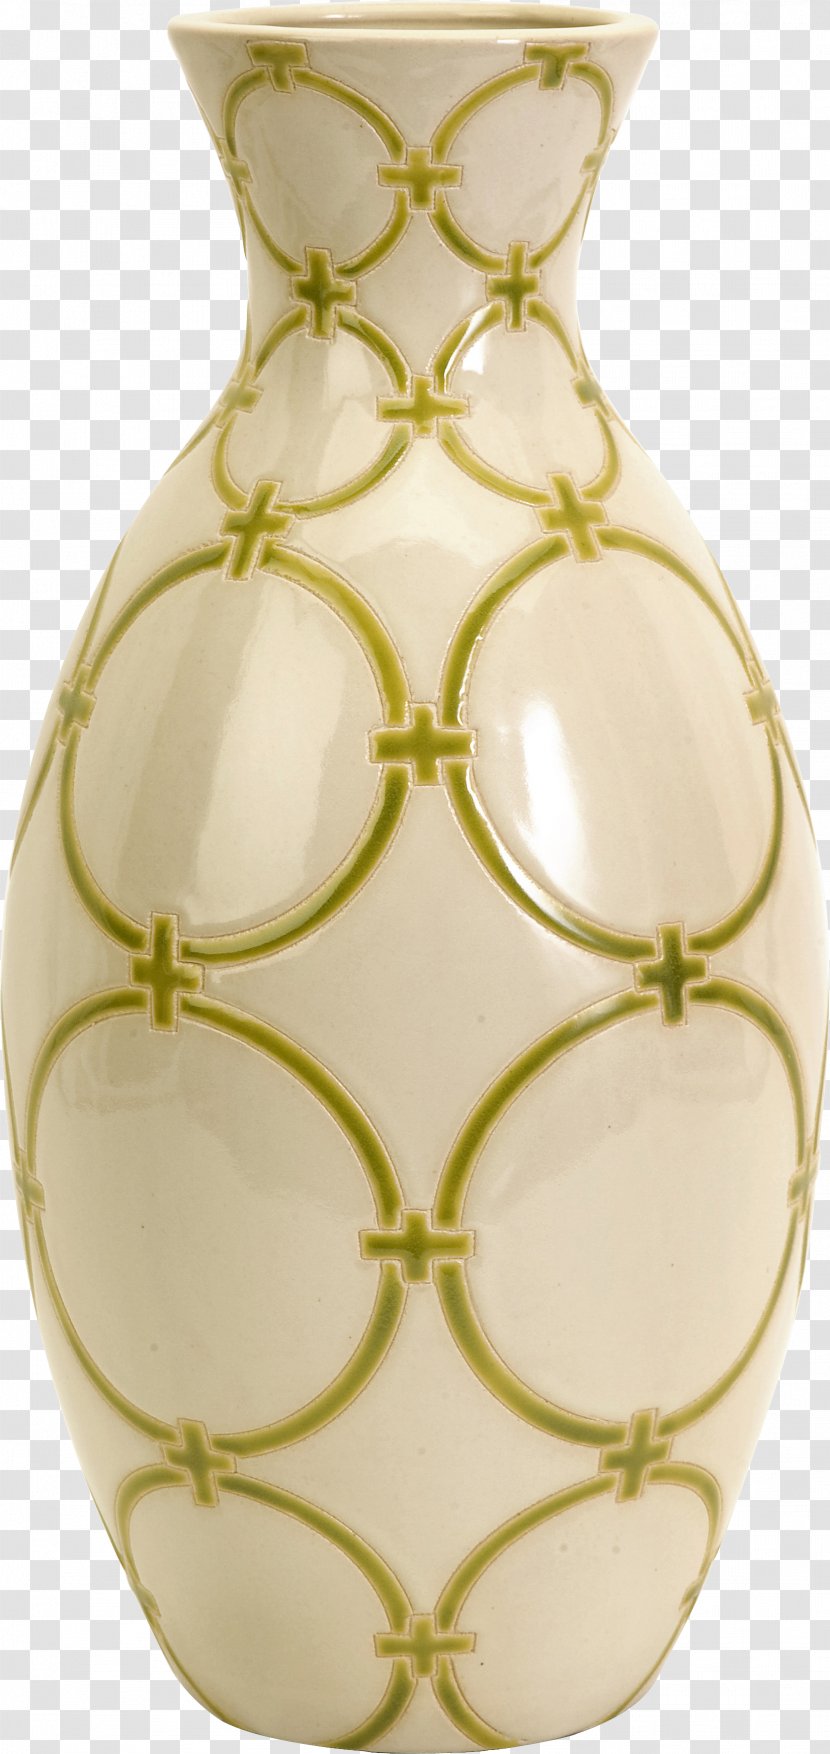 Vase Ceramic Image Clip Art - Photography Transparent PNG